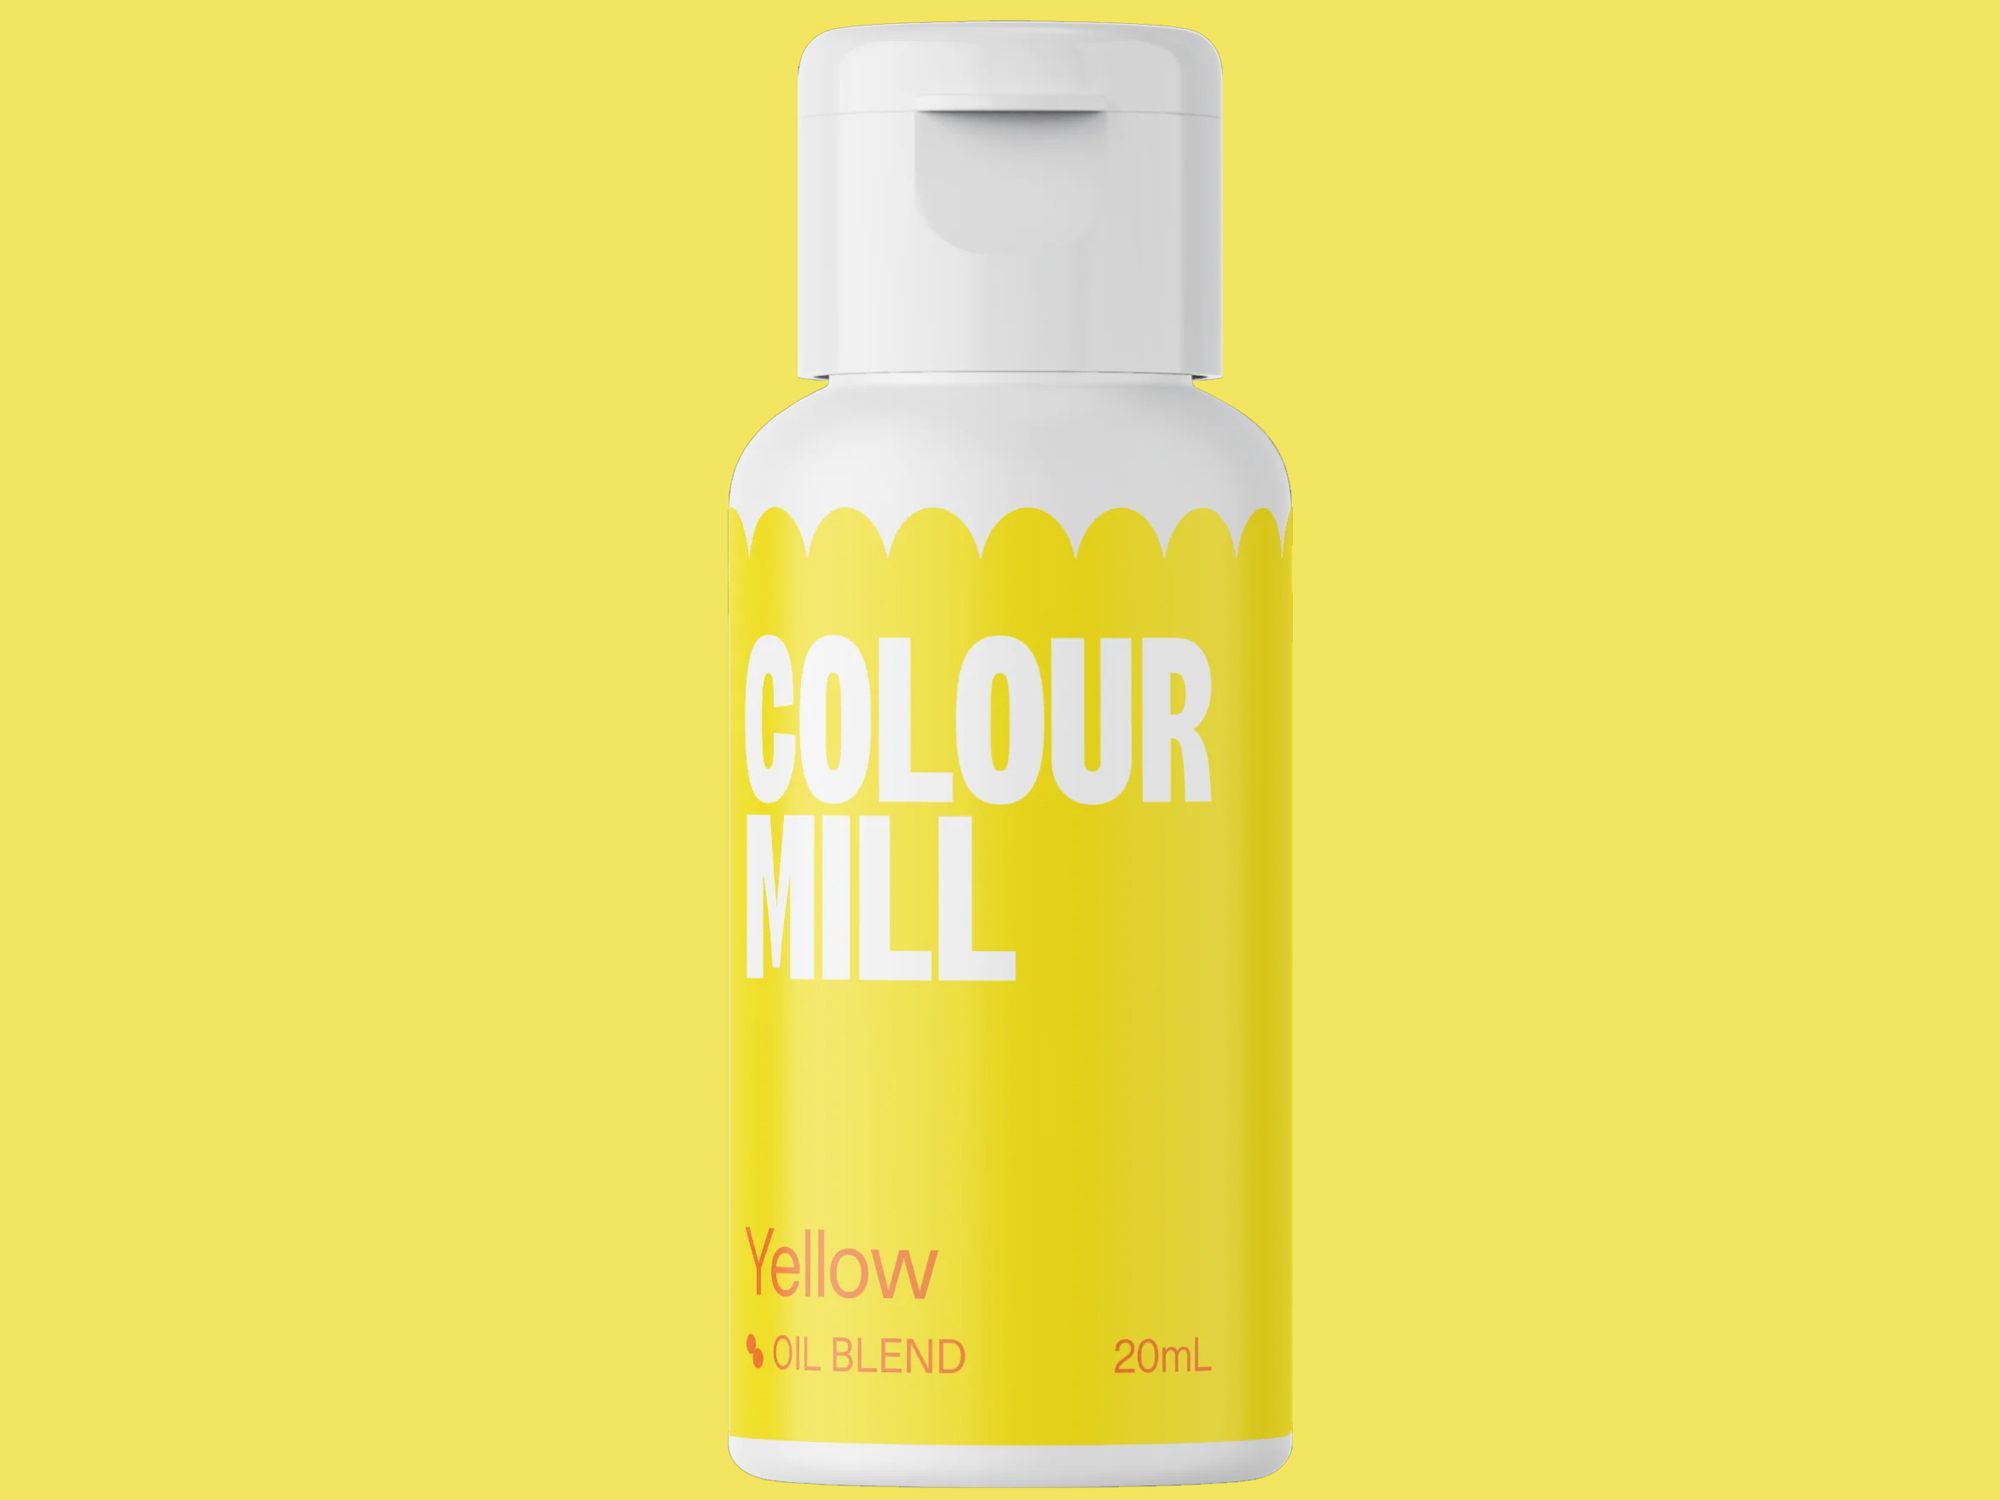 Colour Mill Yellow (Oil Blend) 20ml